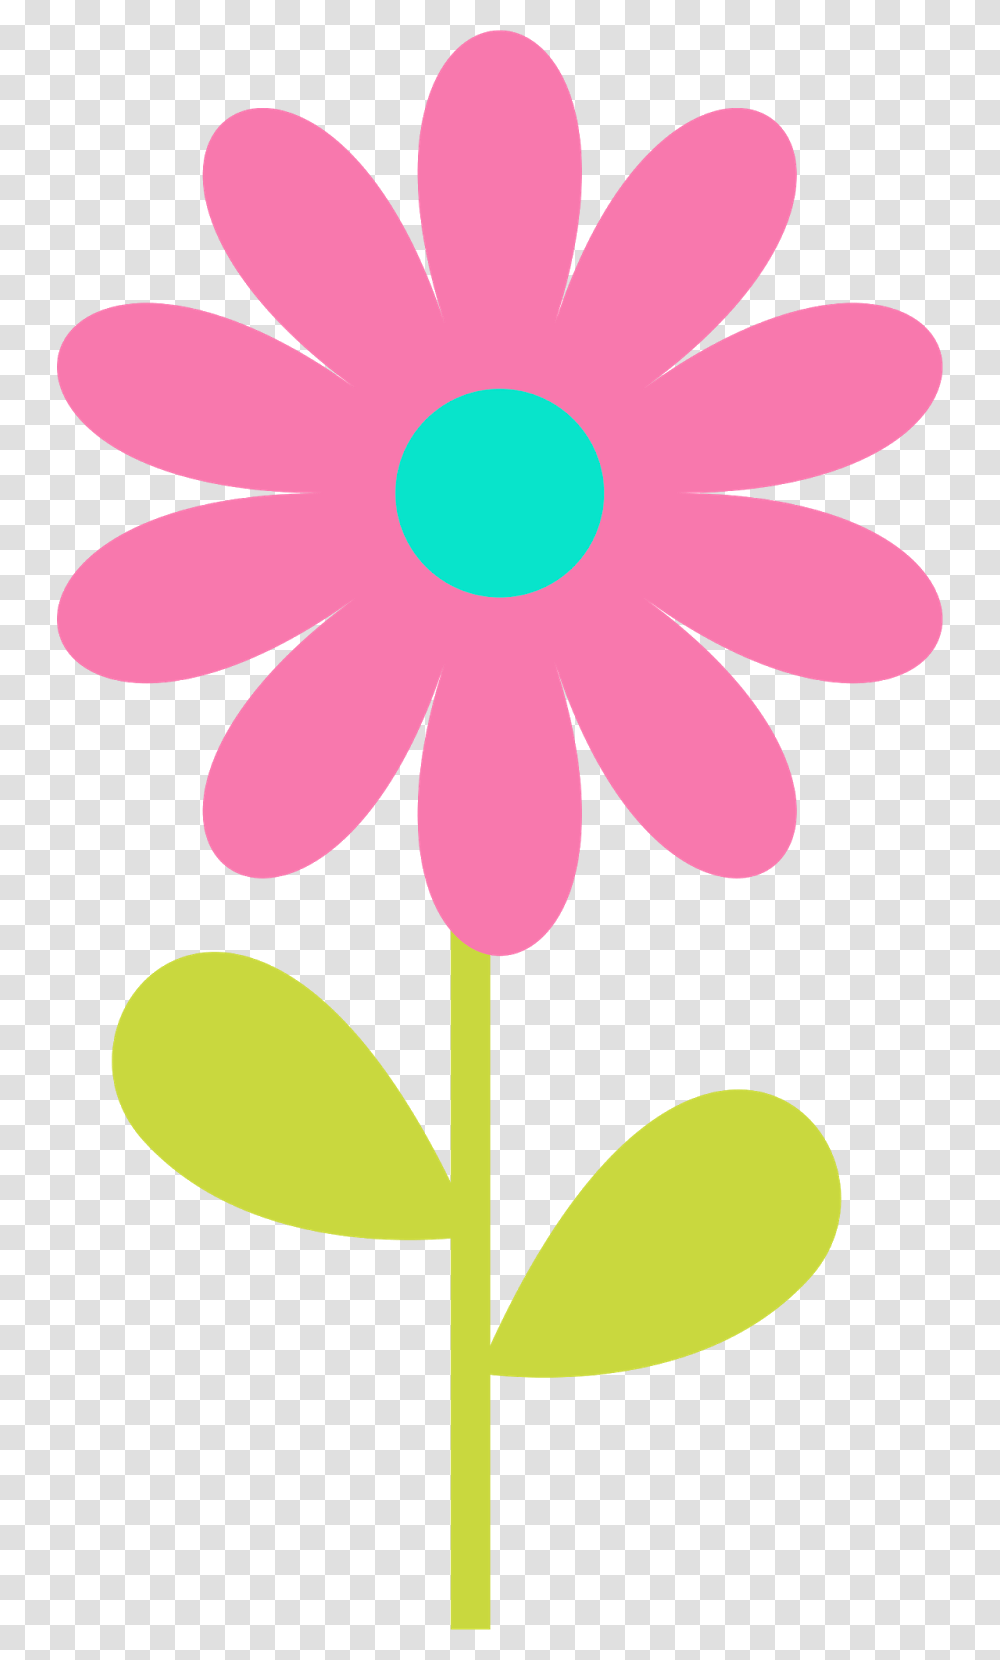 Clipart De Unicornios Para Scrapbook Cute Cartoon Flower With Faces, Plant, Daisy, Daisies, Blossom Transparent Png